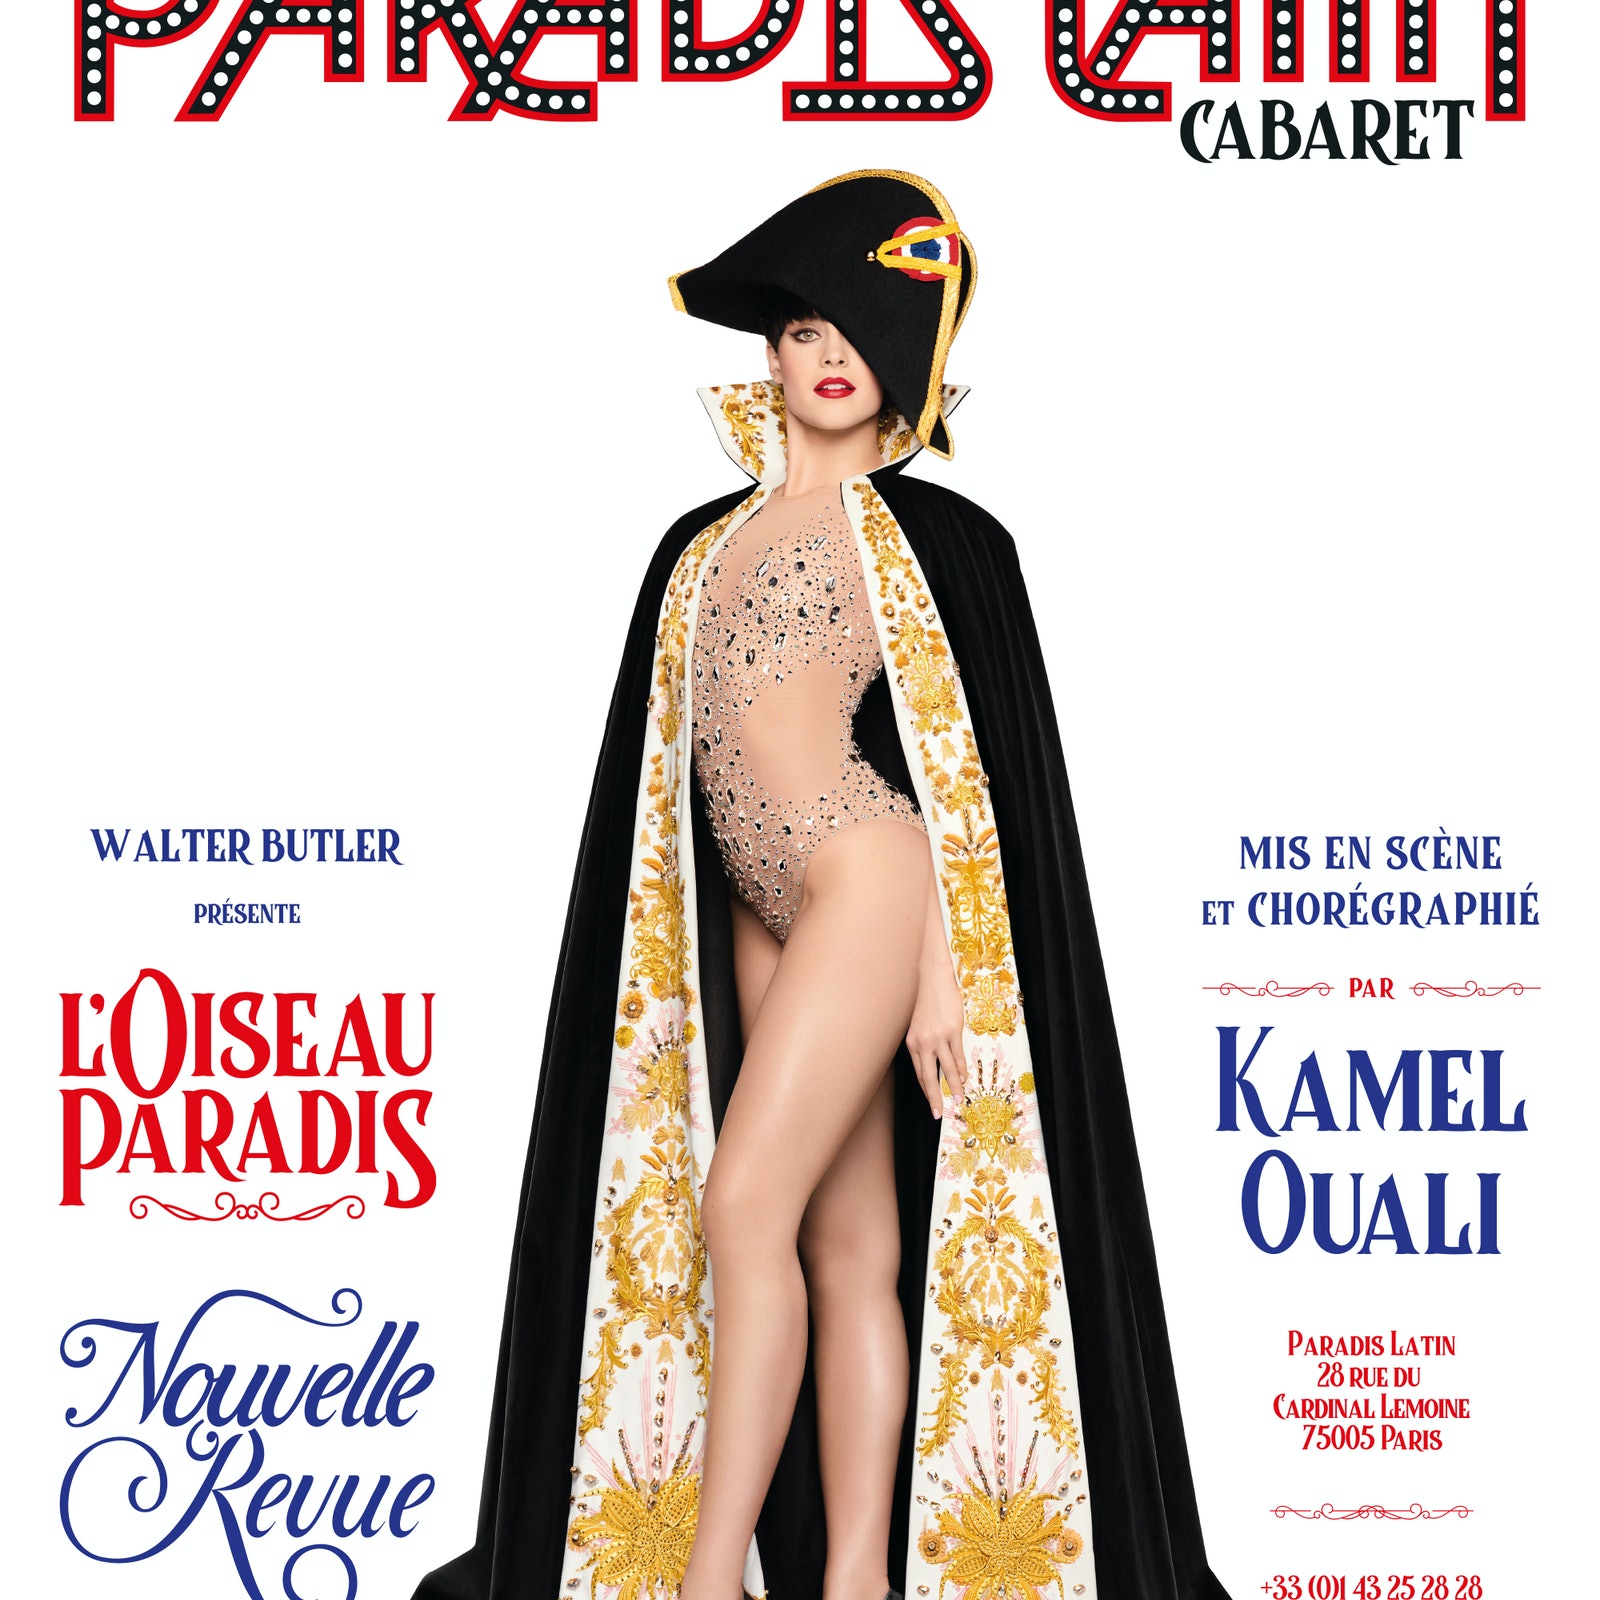 Paradis Latin Cabaret Night Show in France